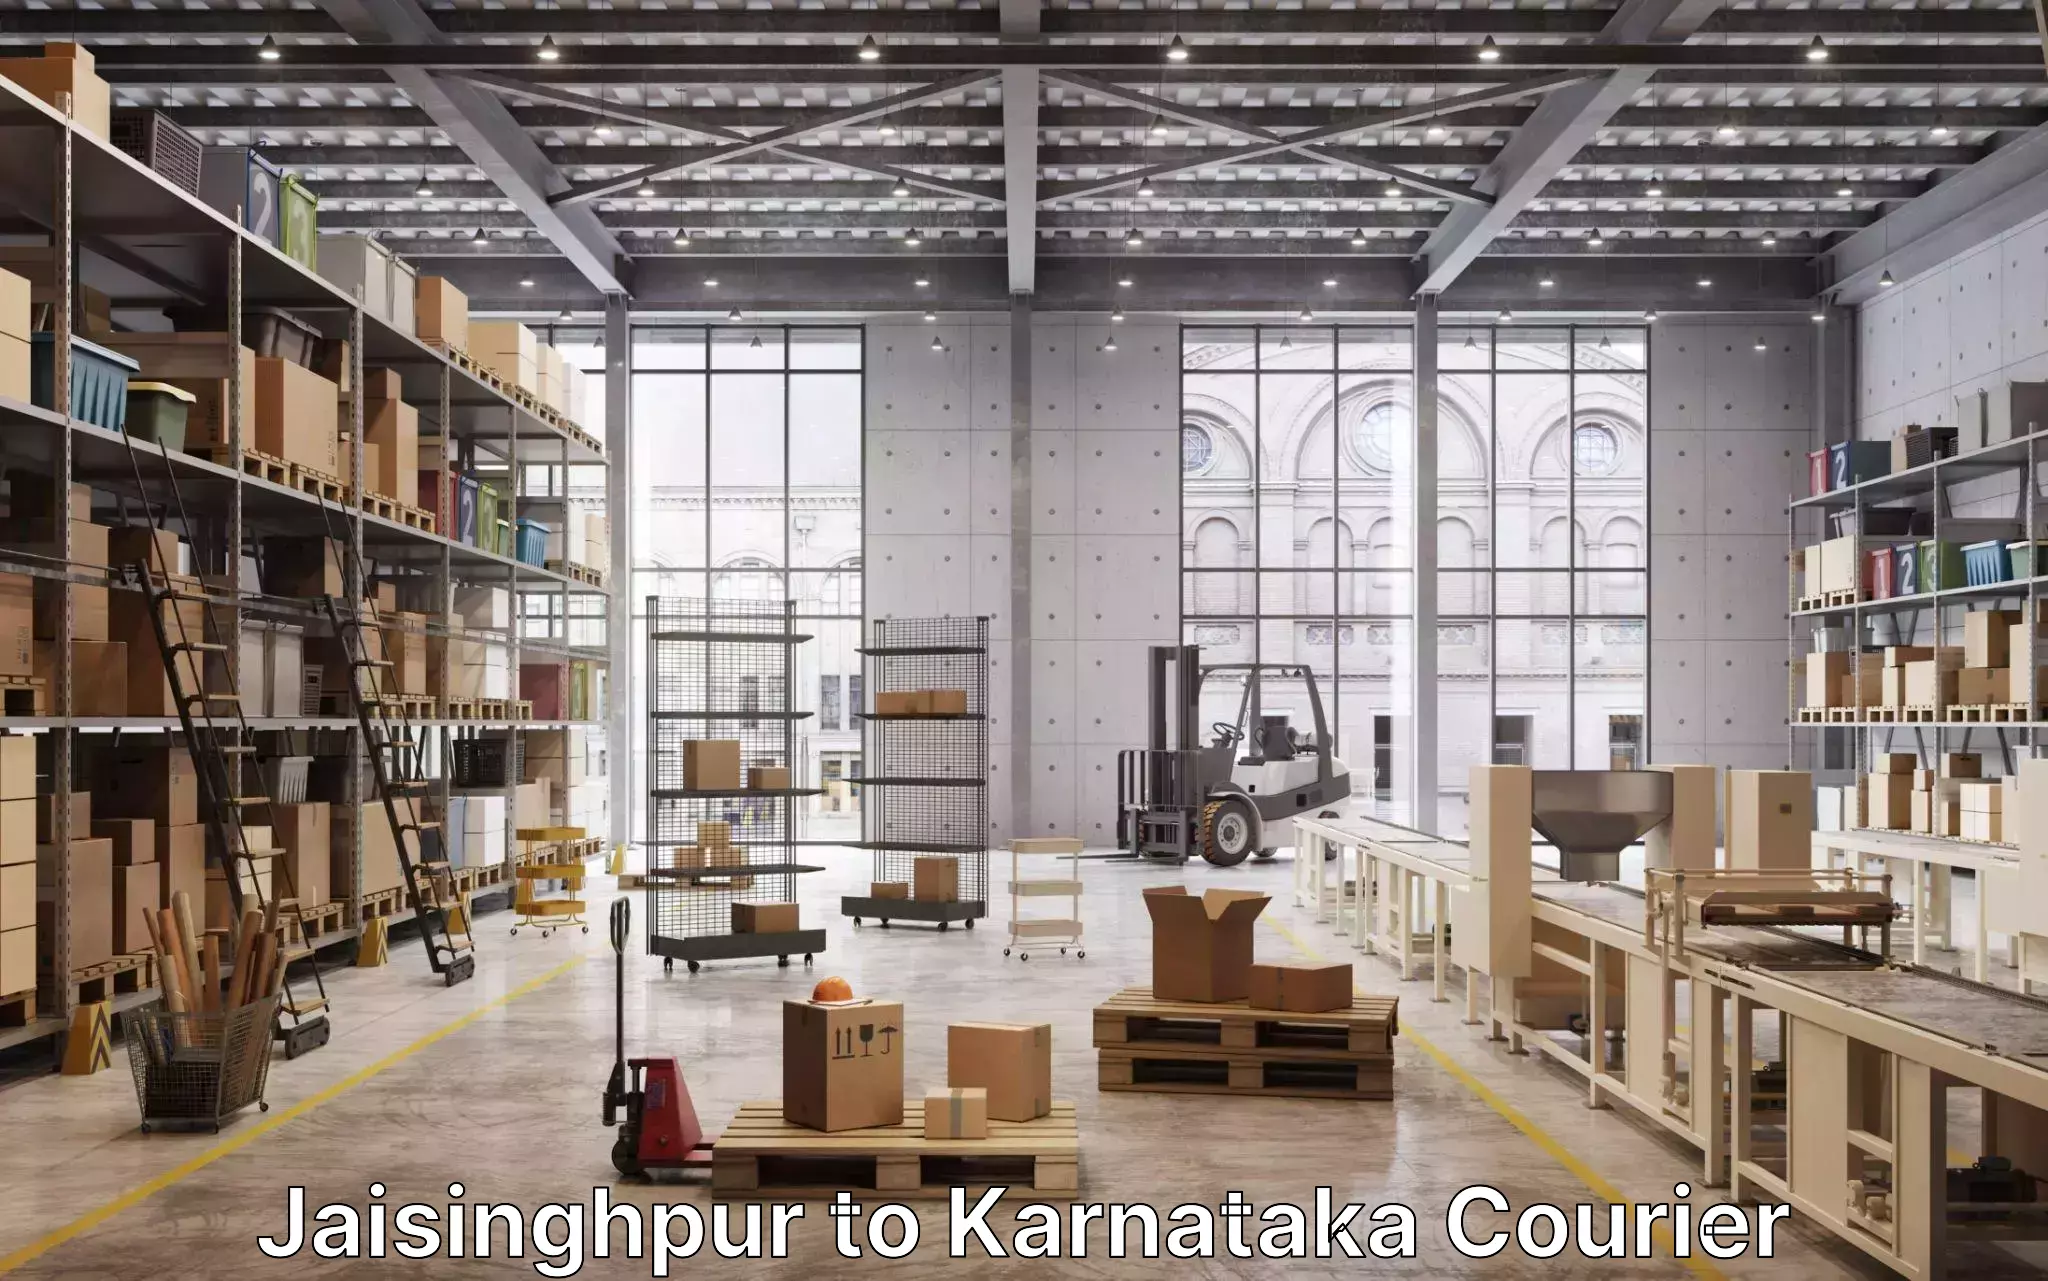 Cost-effective moving options Jaisinghpur to Mysore